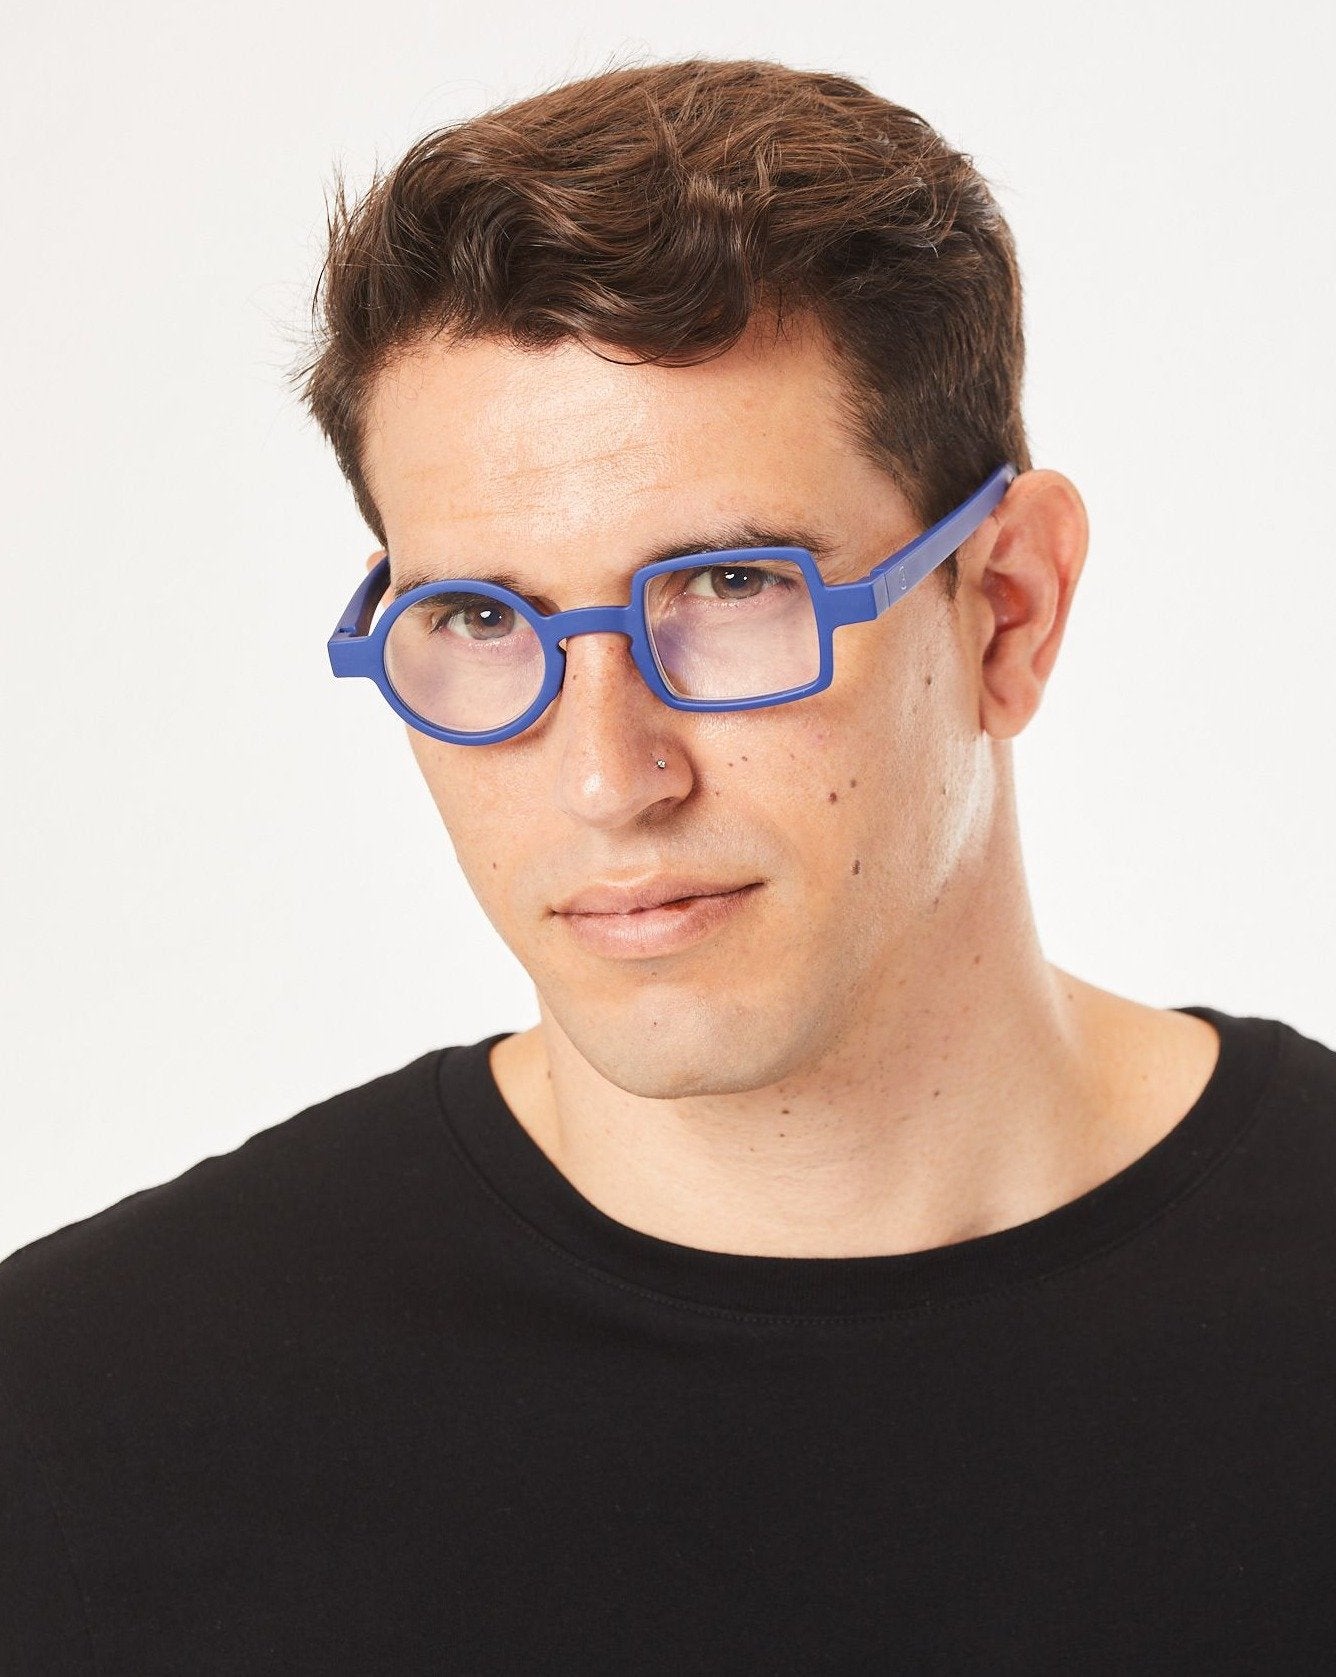 Aptica Pop Art Roy Ready Reading Glasses Unisex Blue Light Filter Male Model